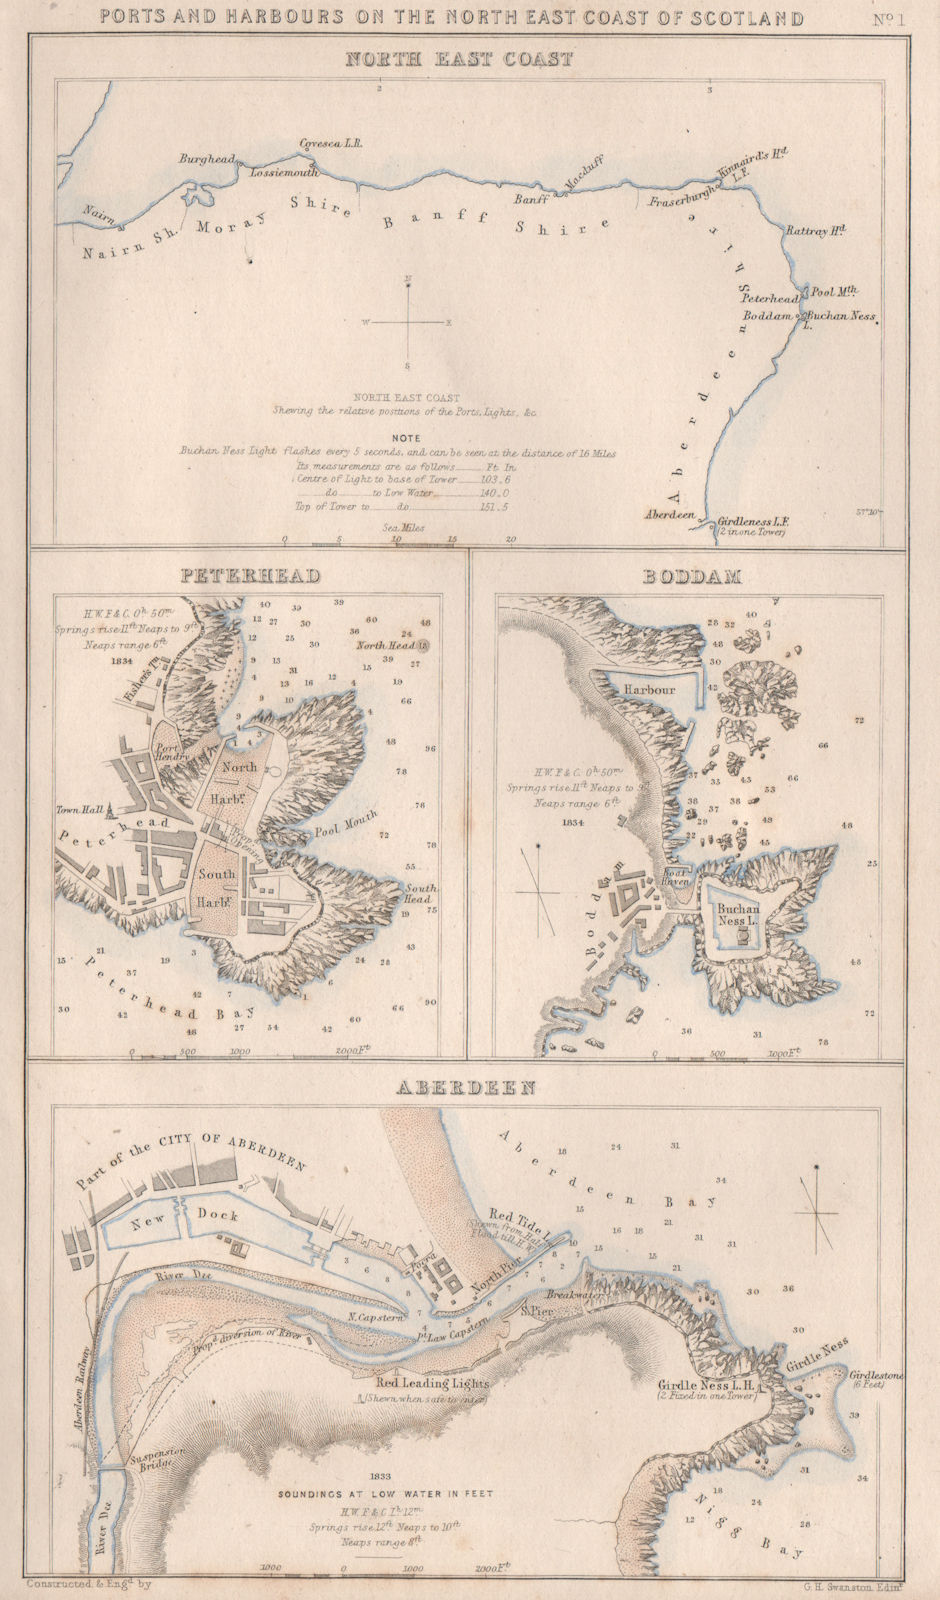 SCOTLAND PORTS & HARBOURS NE COAST. Peterhead Boddam Aberdeen. SWANSTON 1868 map